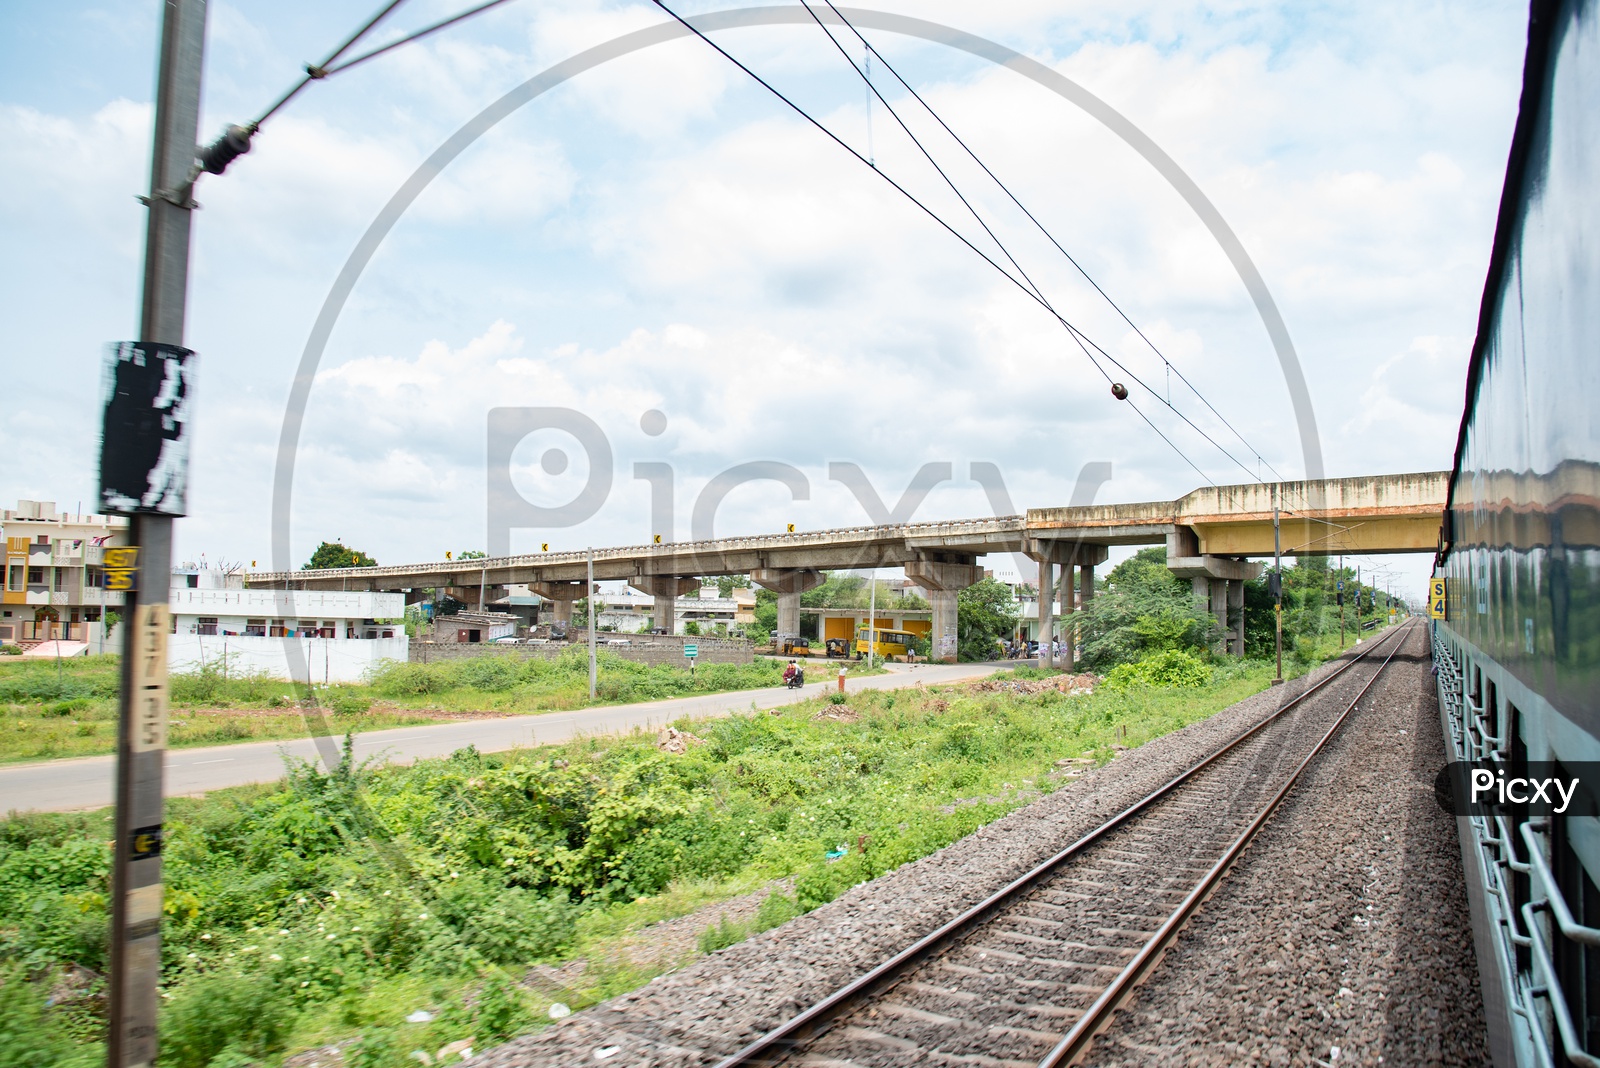 An over bridge on the railway tracks near Madhira on Madhira-Vijayawada road